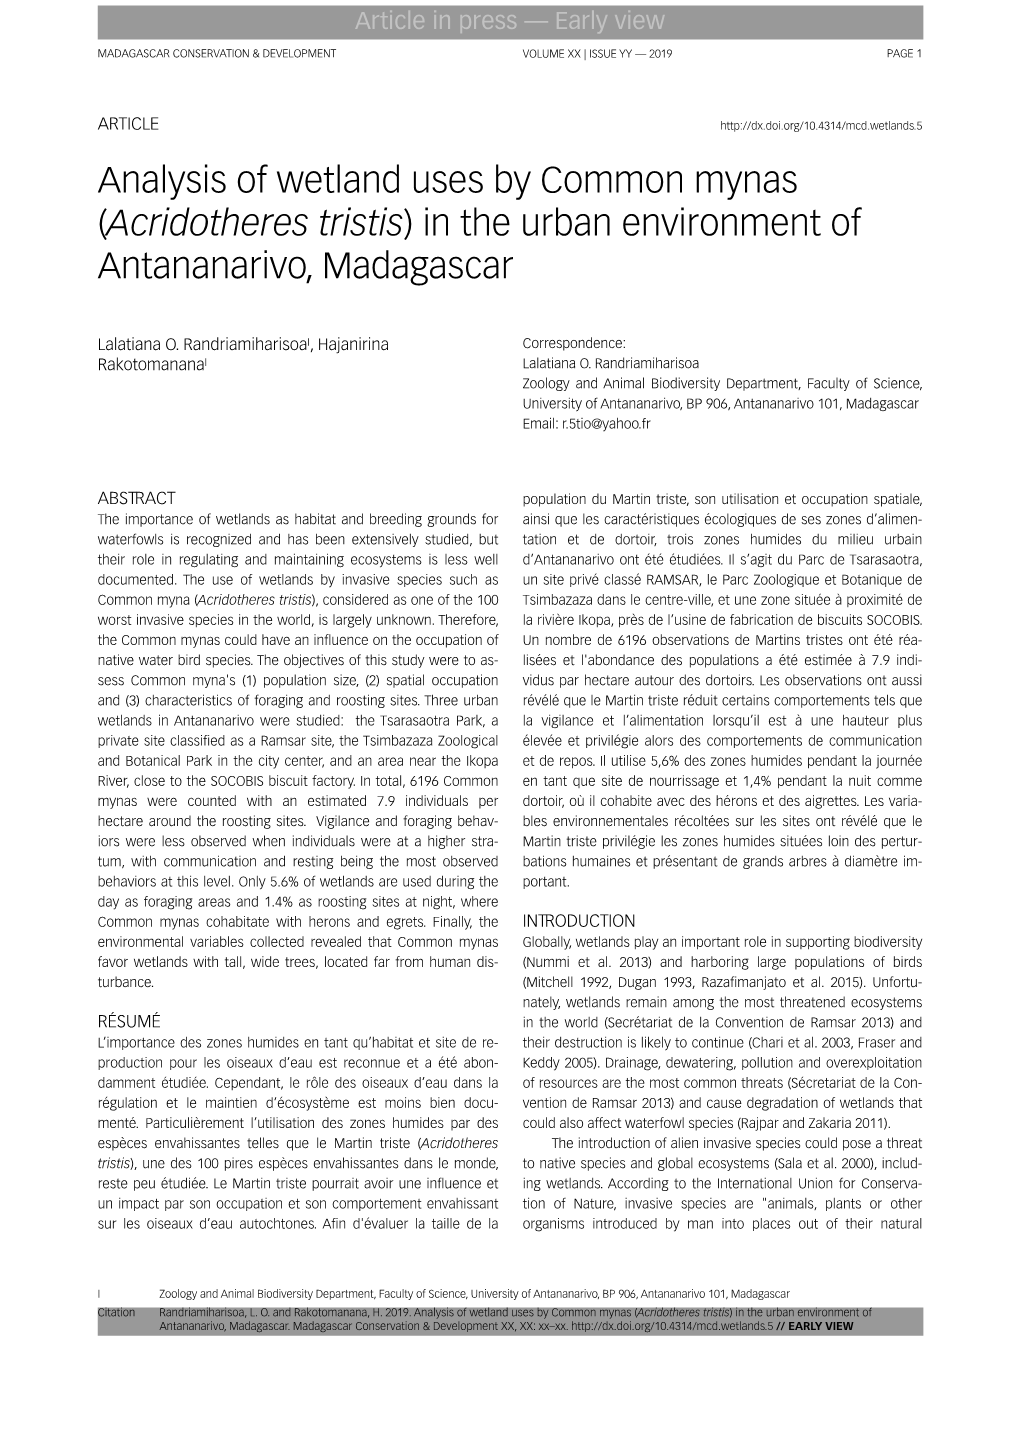 Analysis of Wetland Uses by Common Mynas (Acridotheres Tristis) in the Urban Environment of Antananarivo, Madagascar